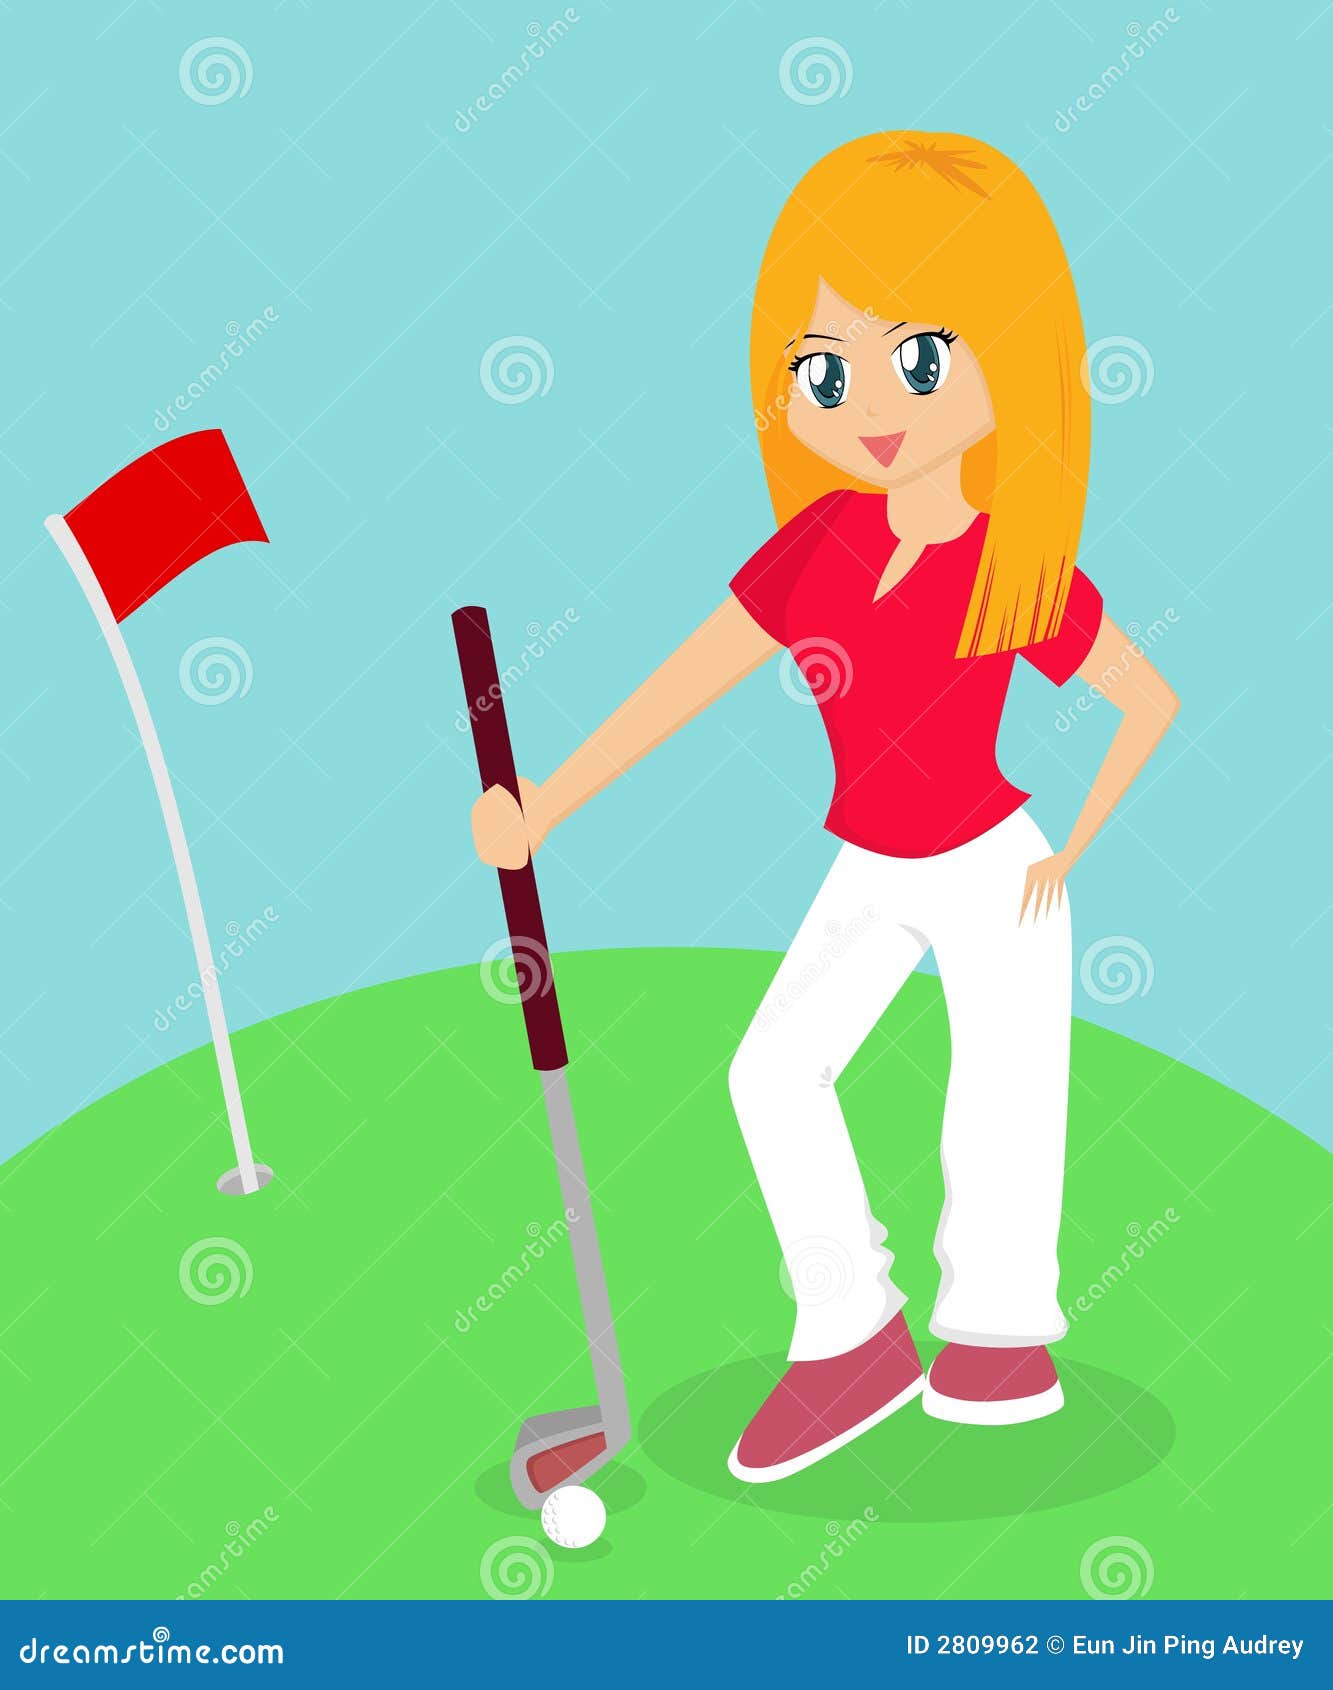 clipart girl golfer - photo #4